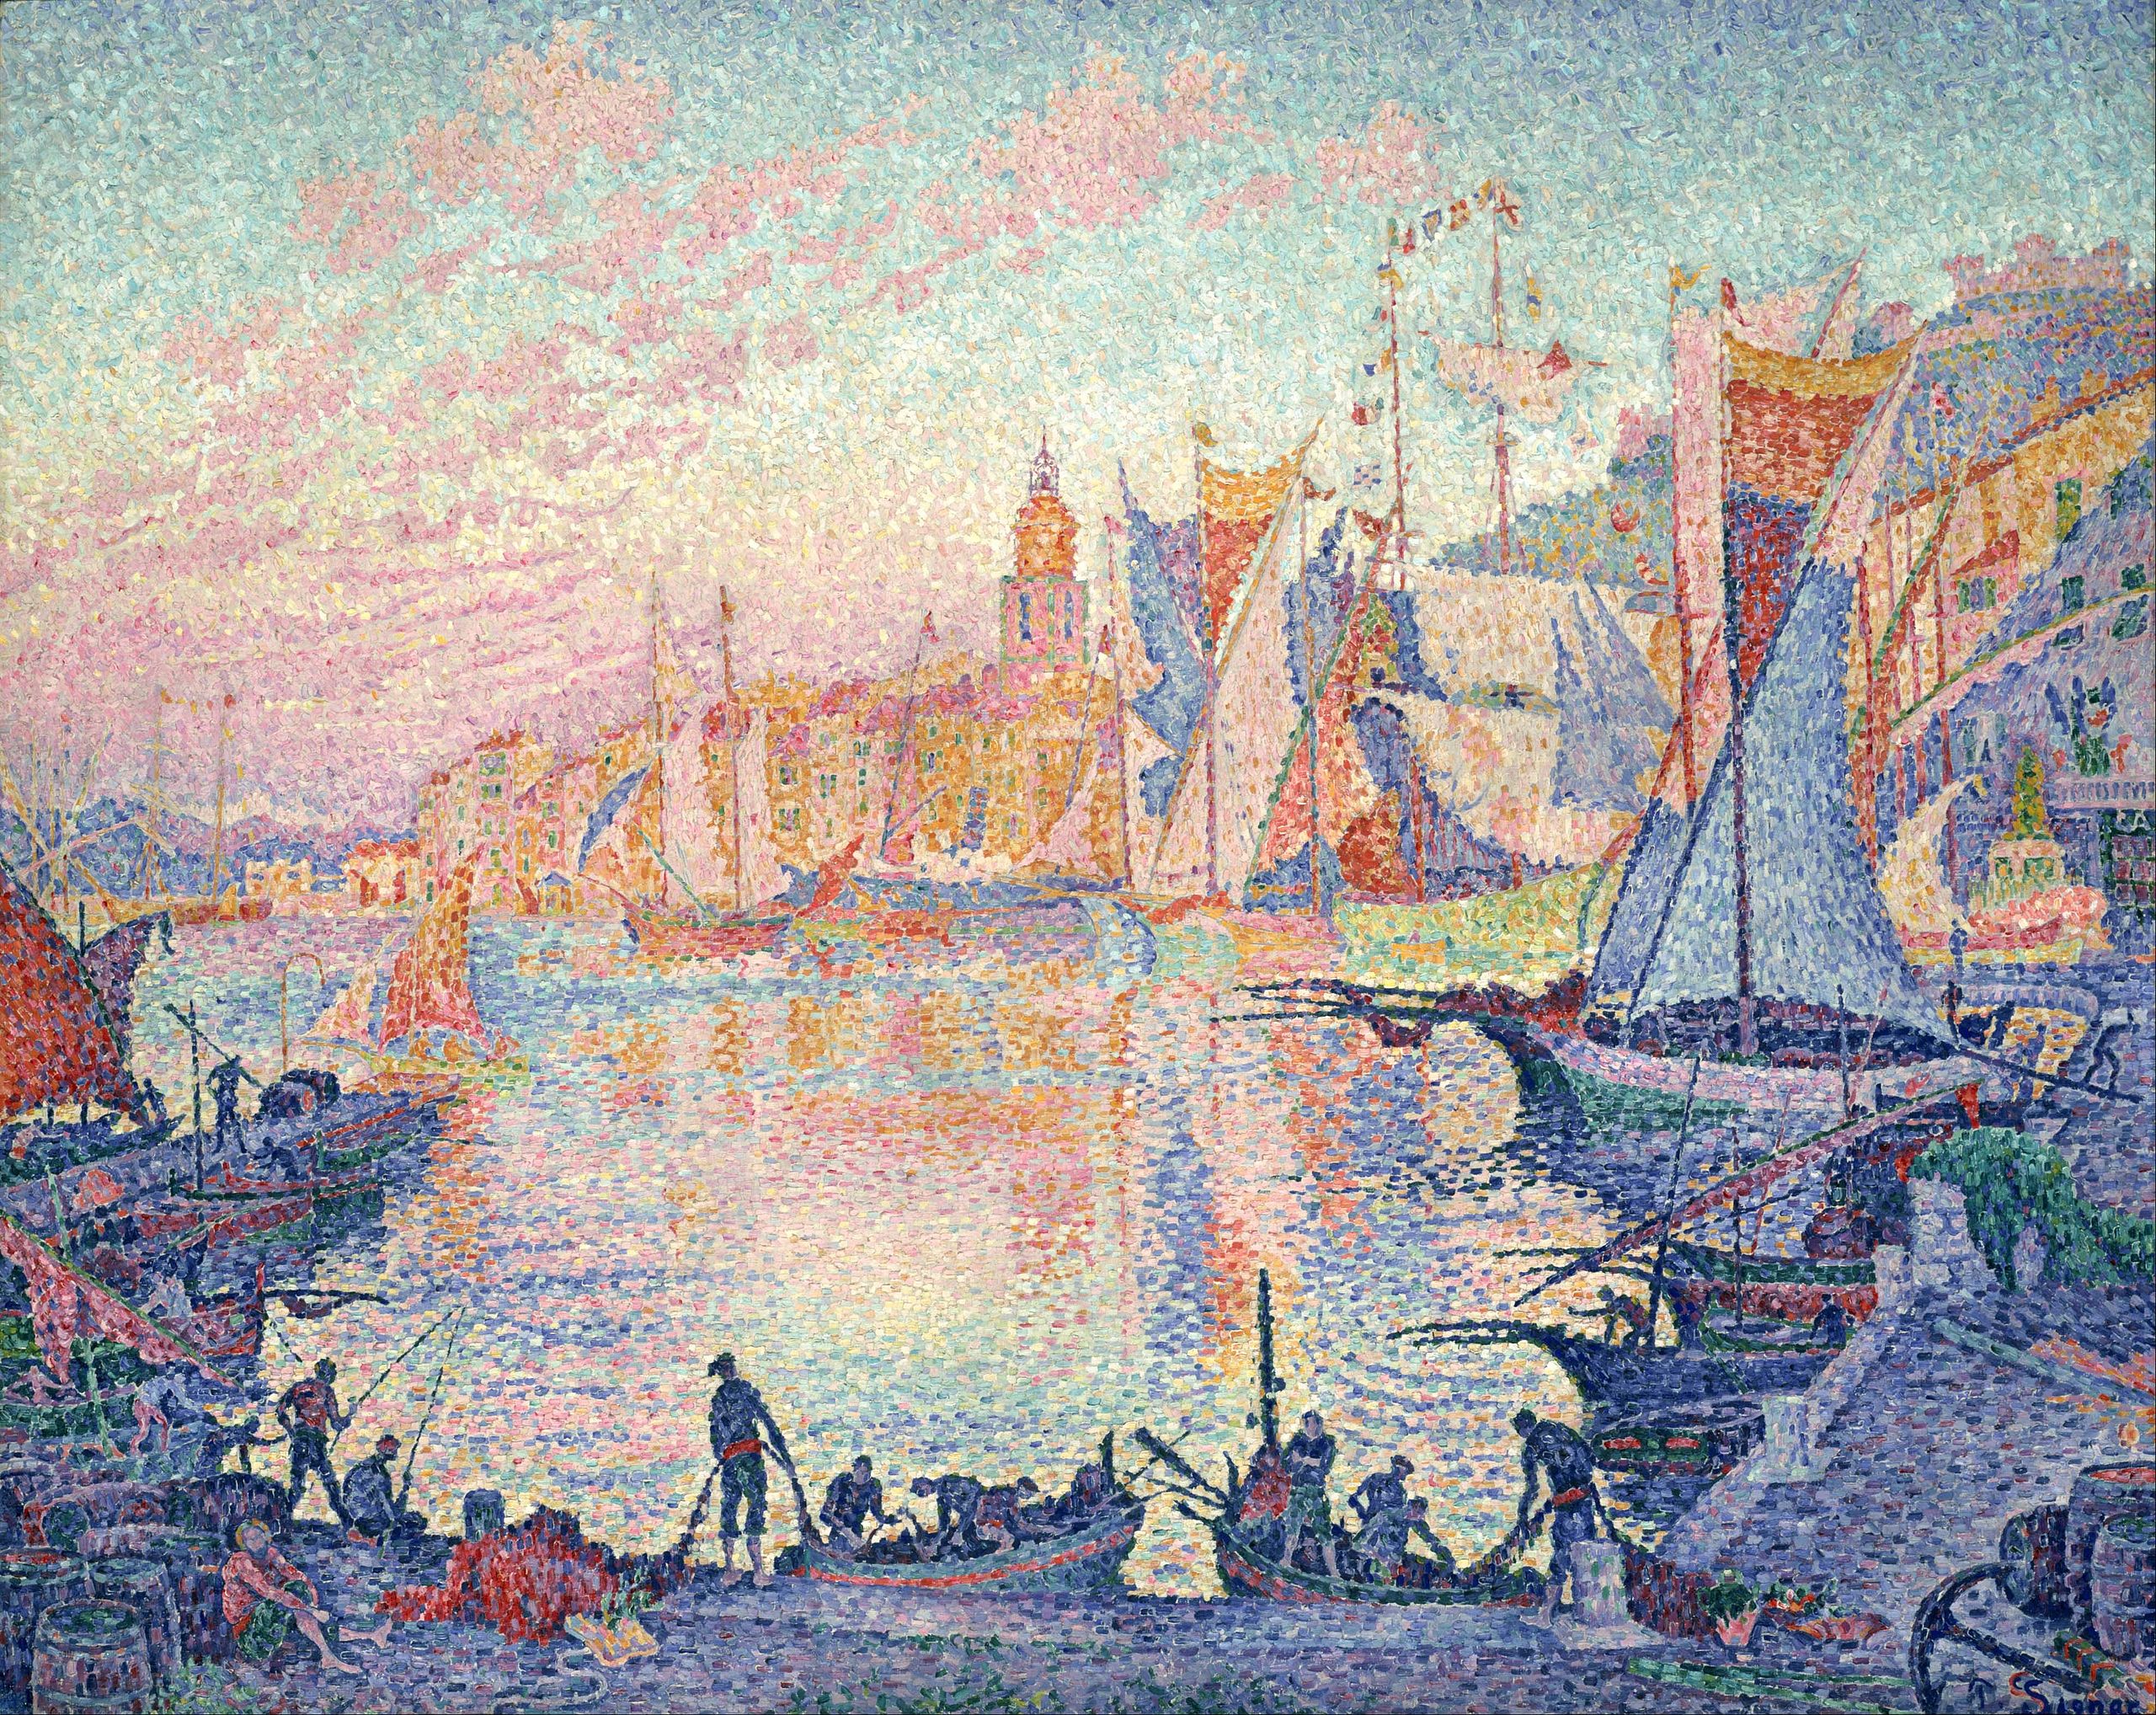 Il porto di Saint-Tropez by Paul Signac - 1901-1902 - 131 x 161,5 cm 